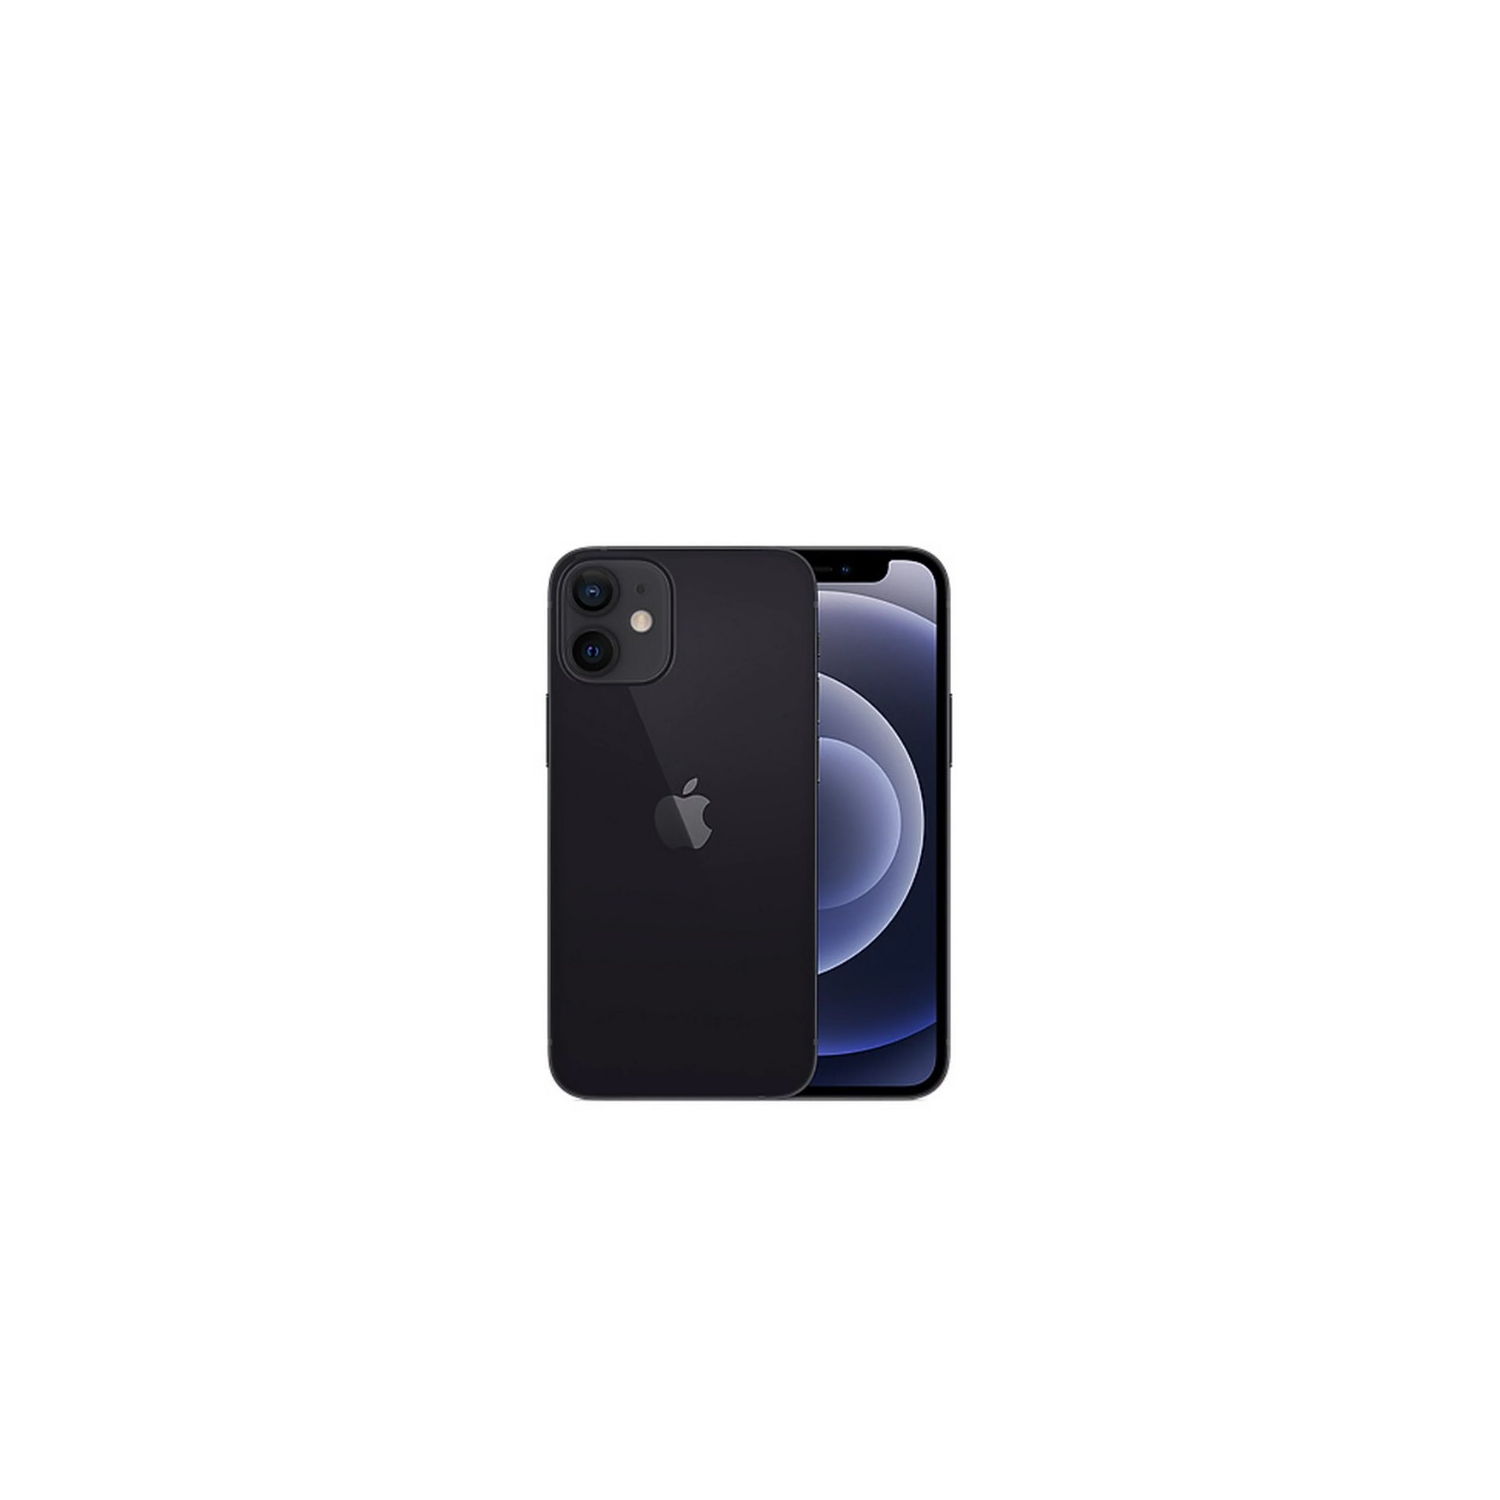 Apple iPhone 12 mini 64GB Smartphone - Black - Unlocked - Open Box